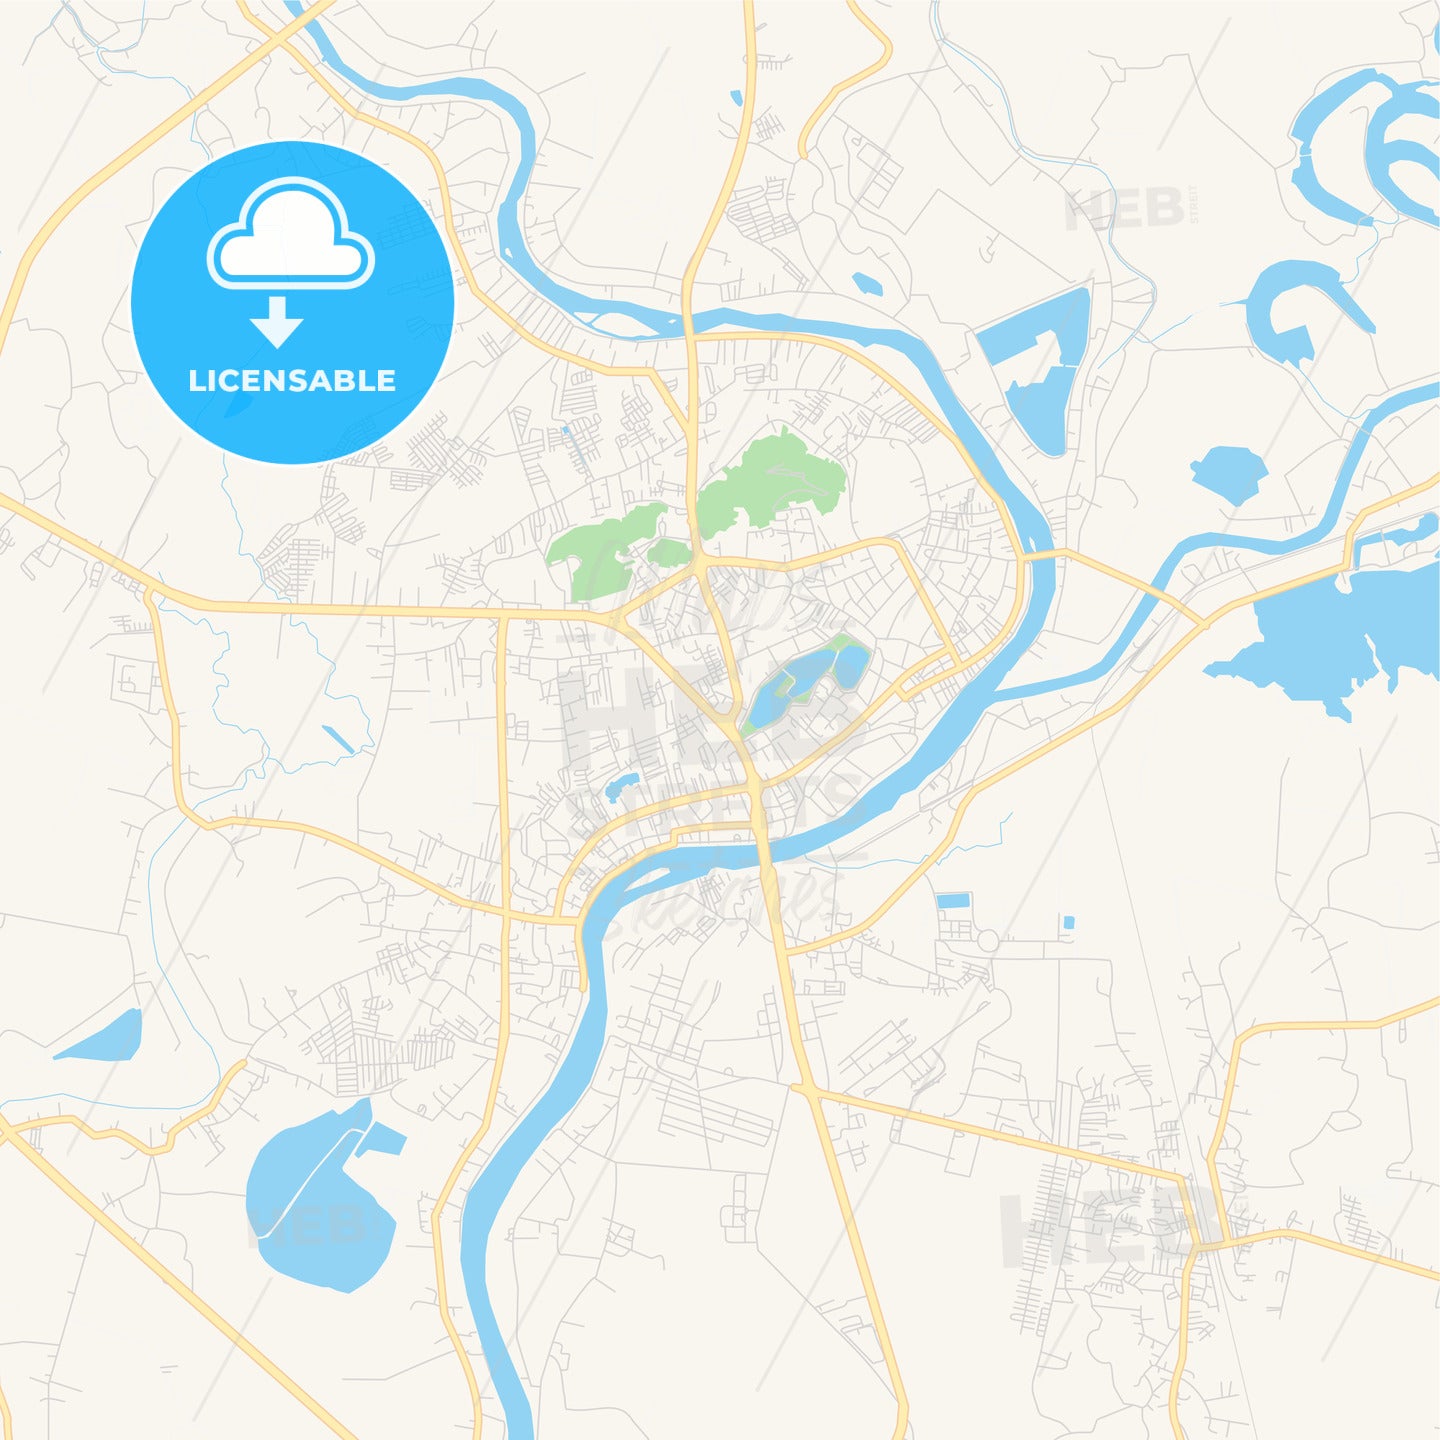 Printable street map of Nakhon Sawan, Thailand